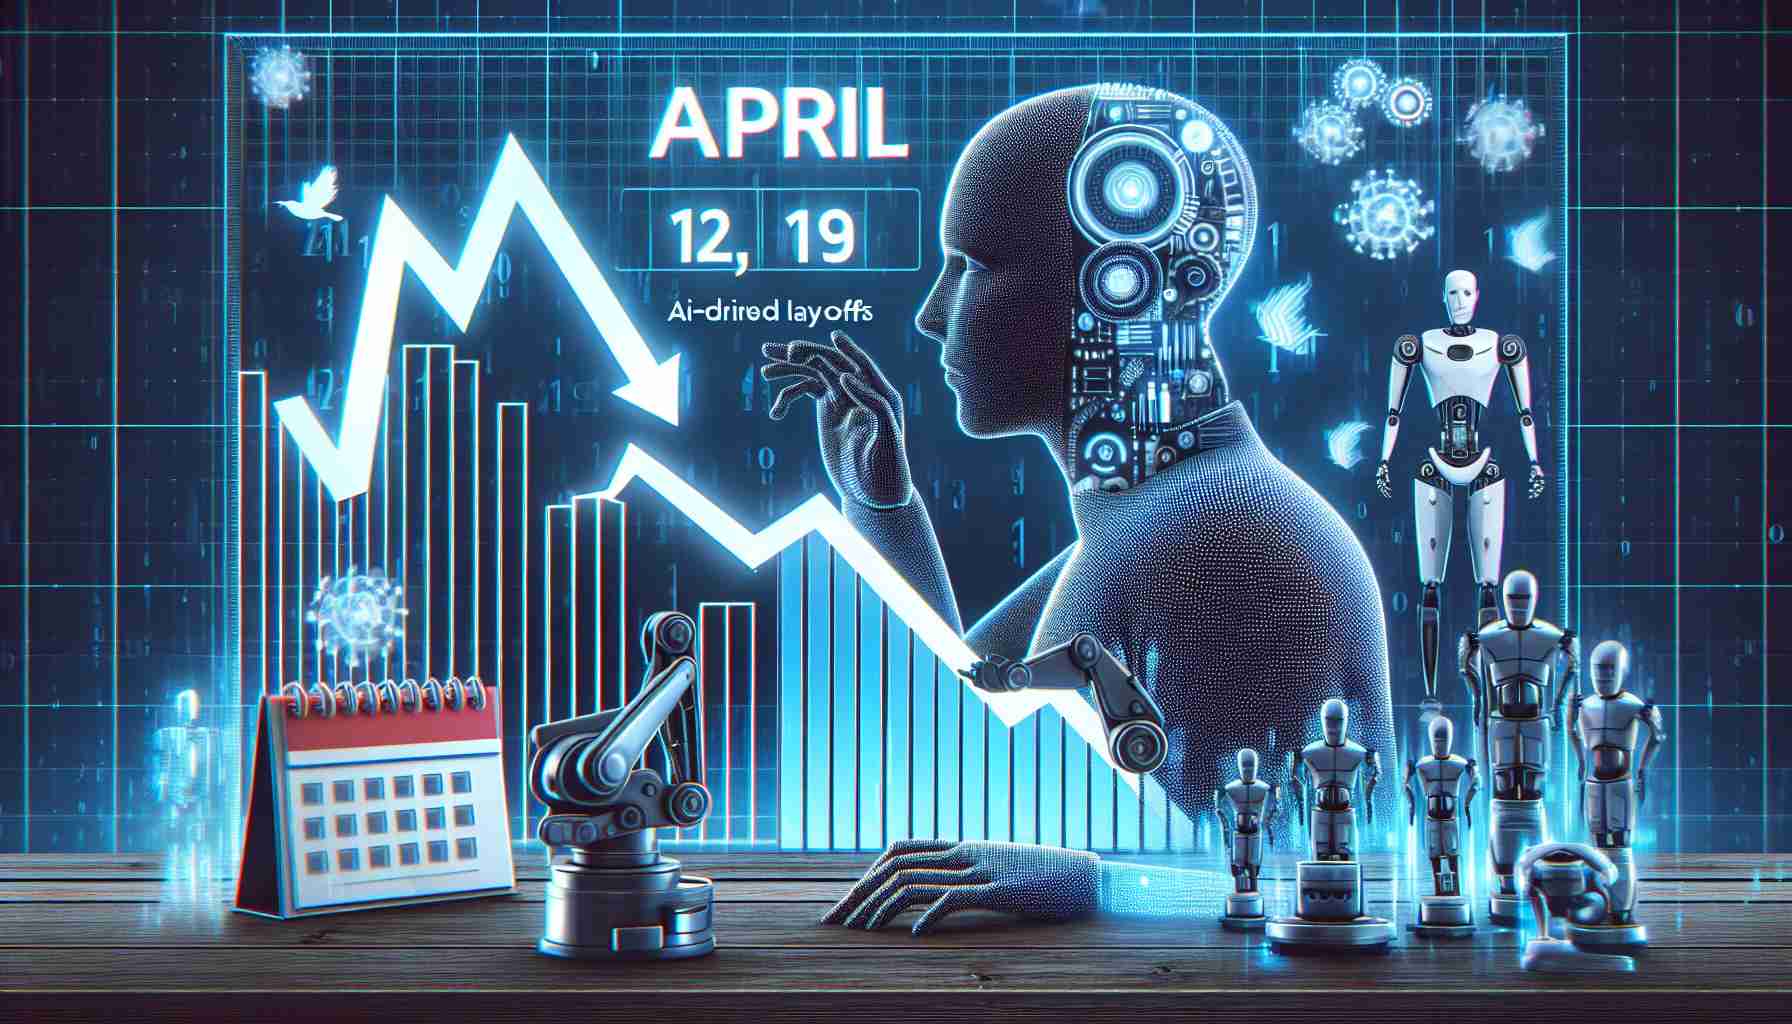 April Job Cuts in US Exhibit a Subtle Decline Amid AI-Driven Layoffs